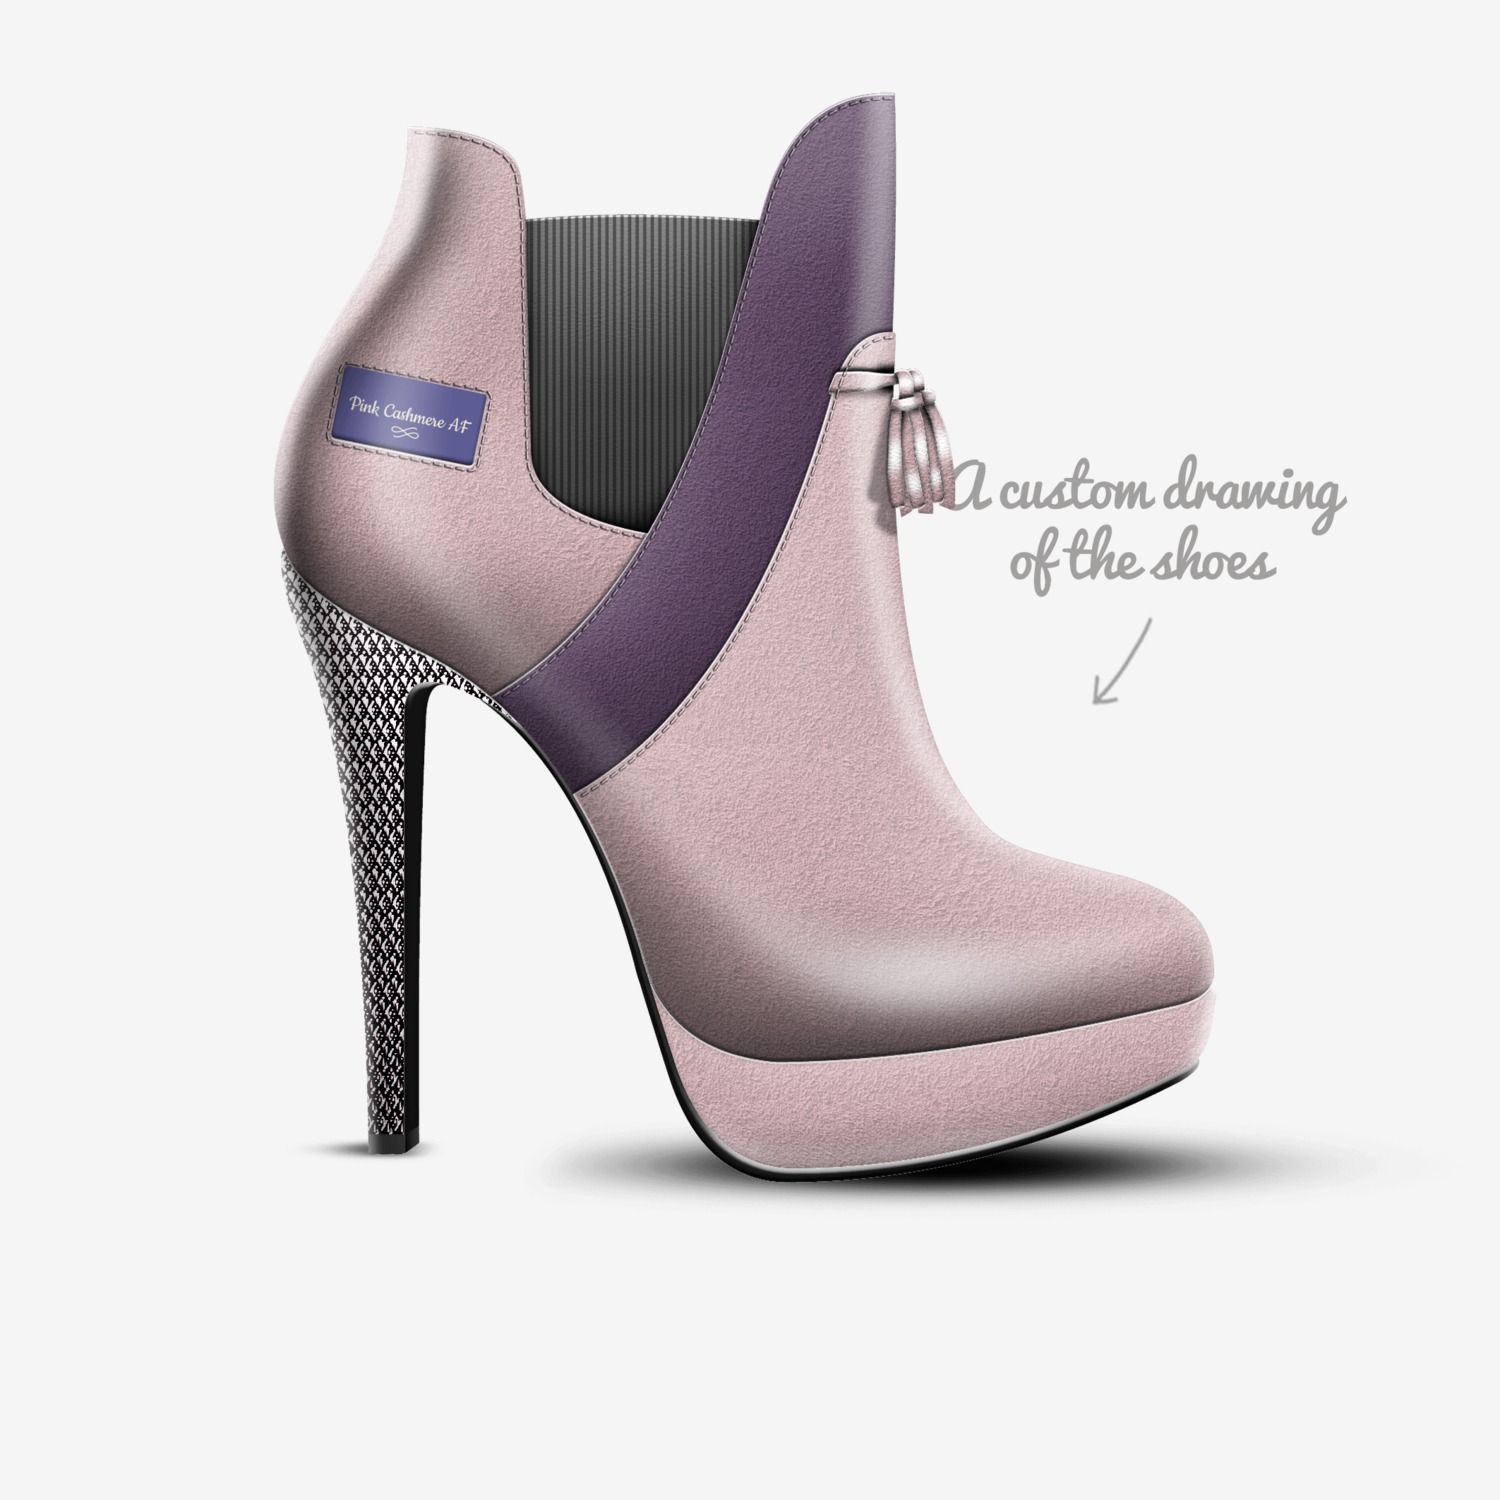 Pink Cashmere AF | Shoe Anna A Custom by concept Fantastic